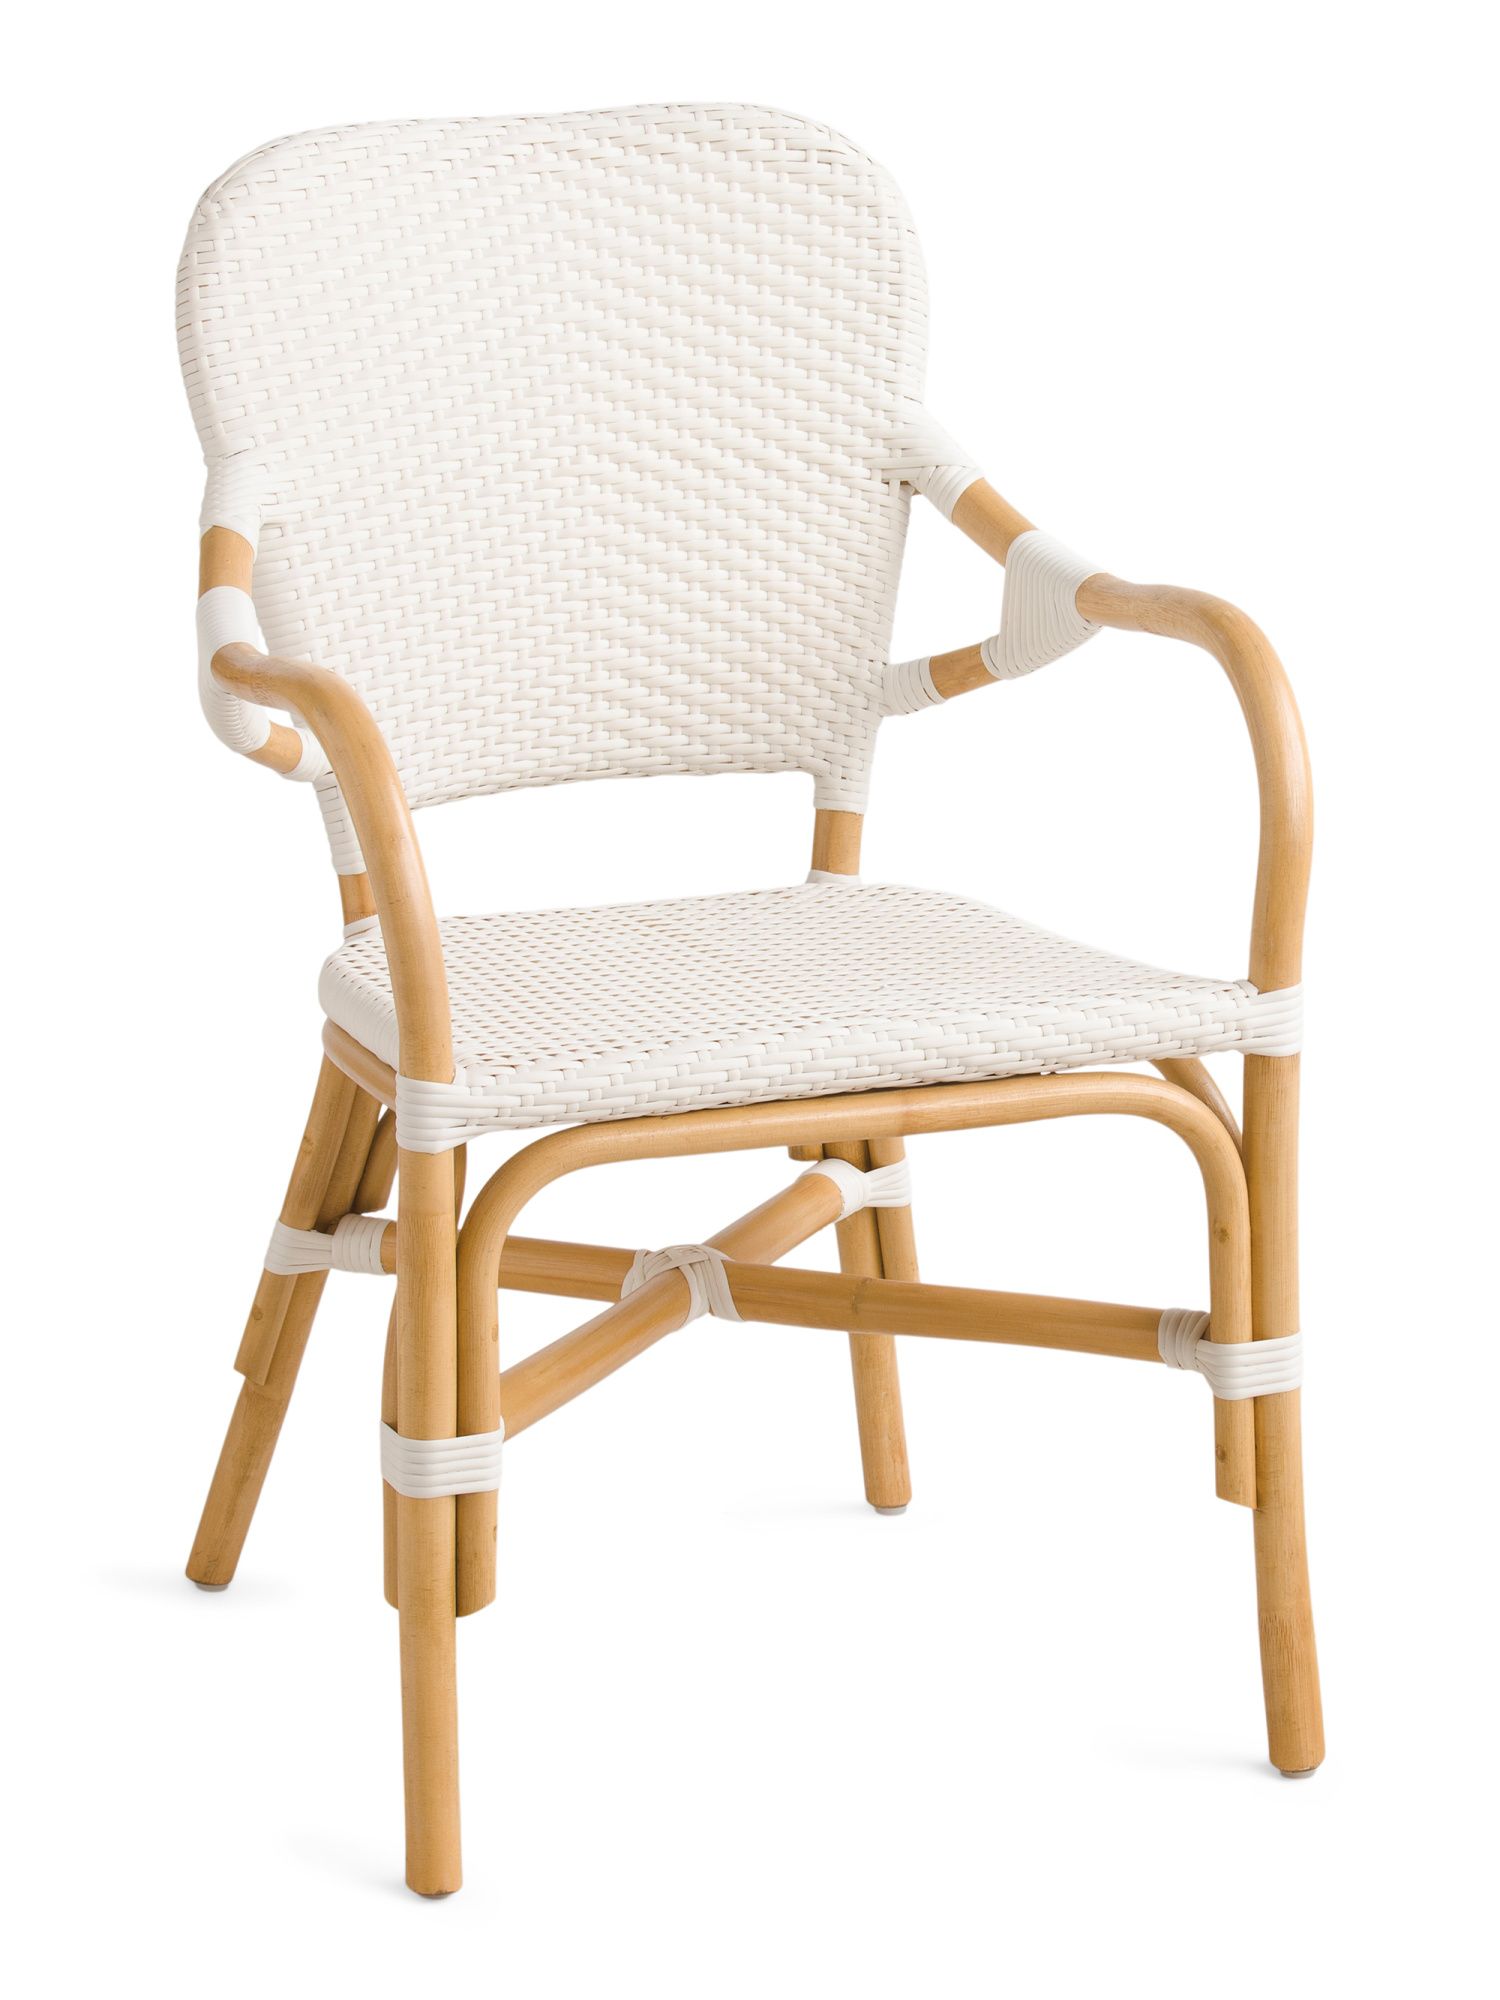 Outdoor Bistro Chair | TJ Maxx